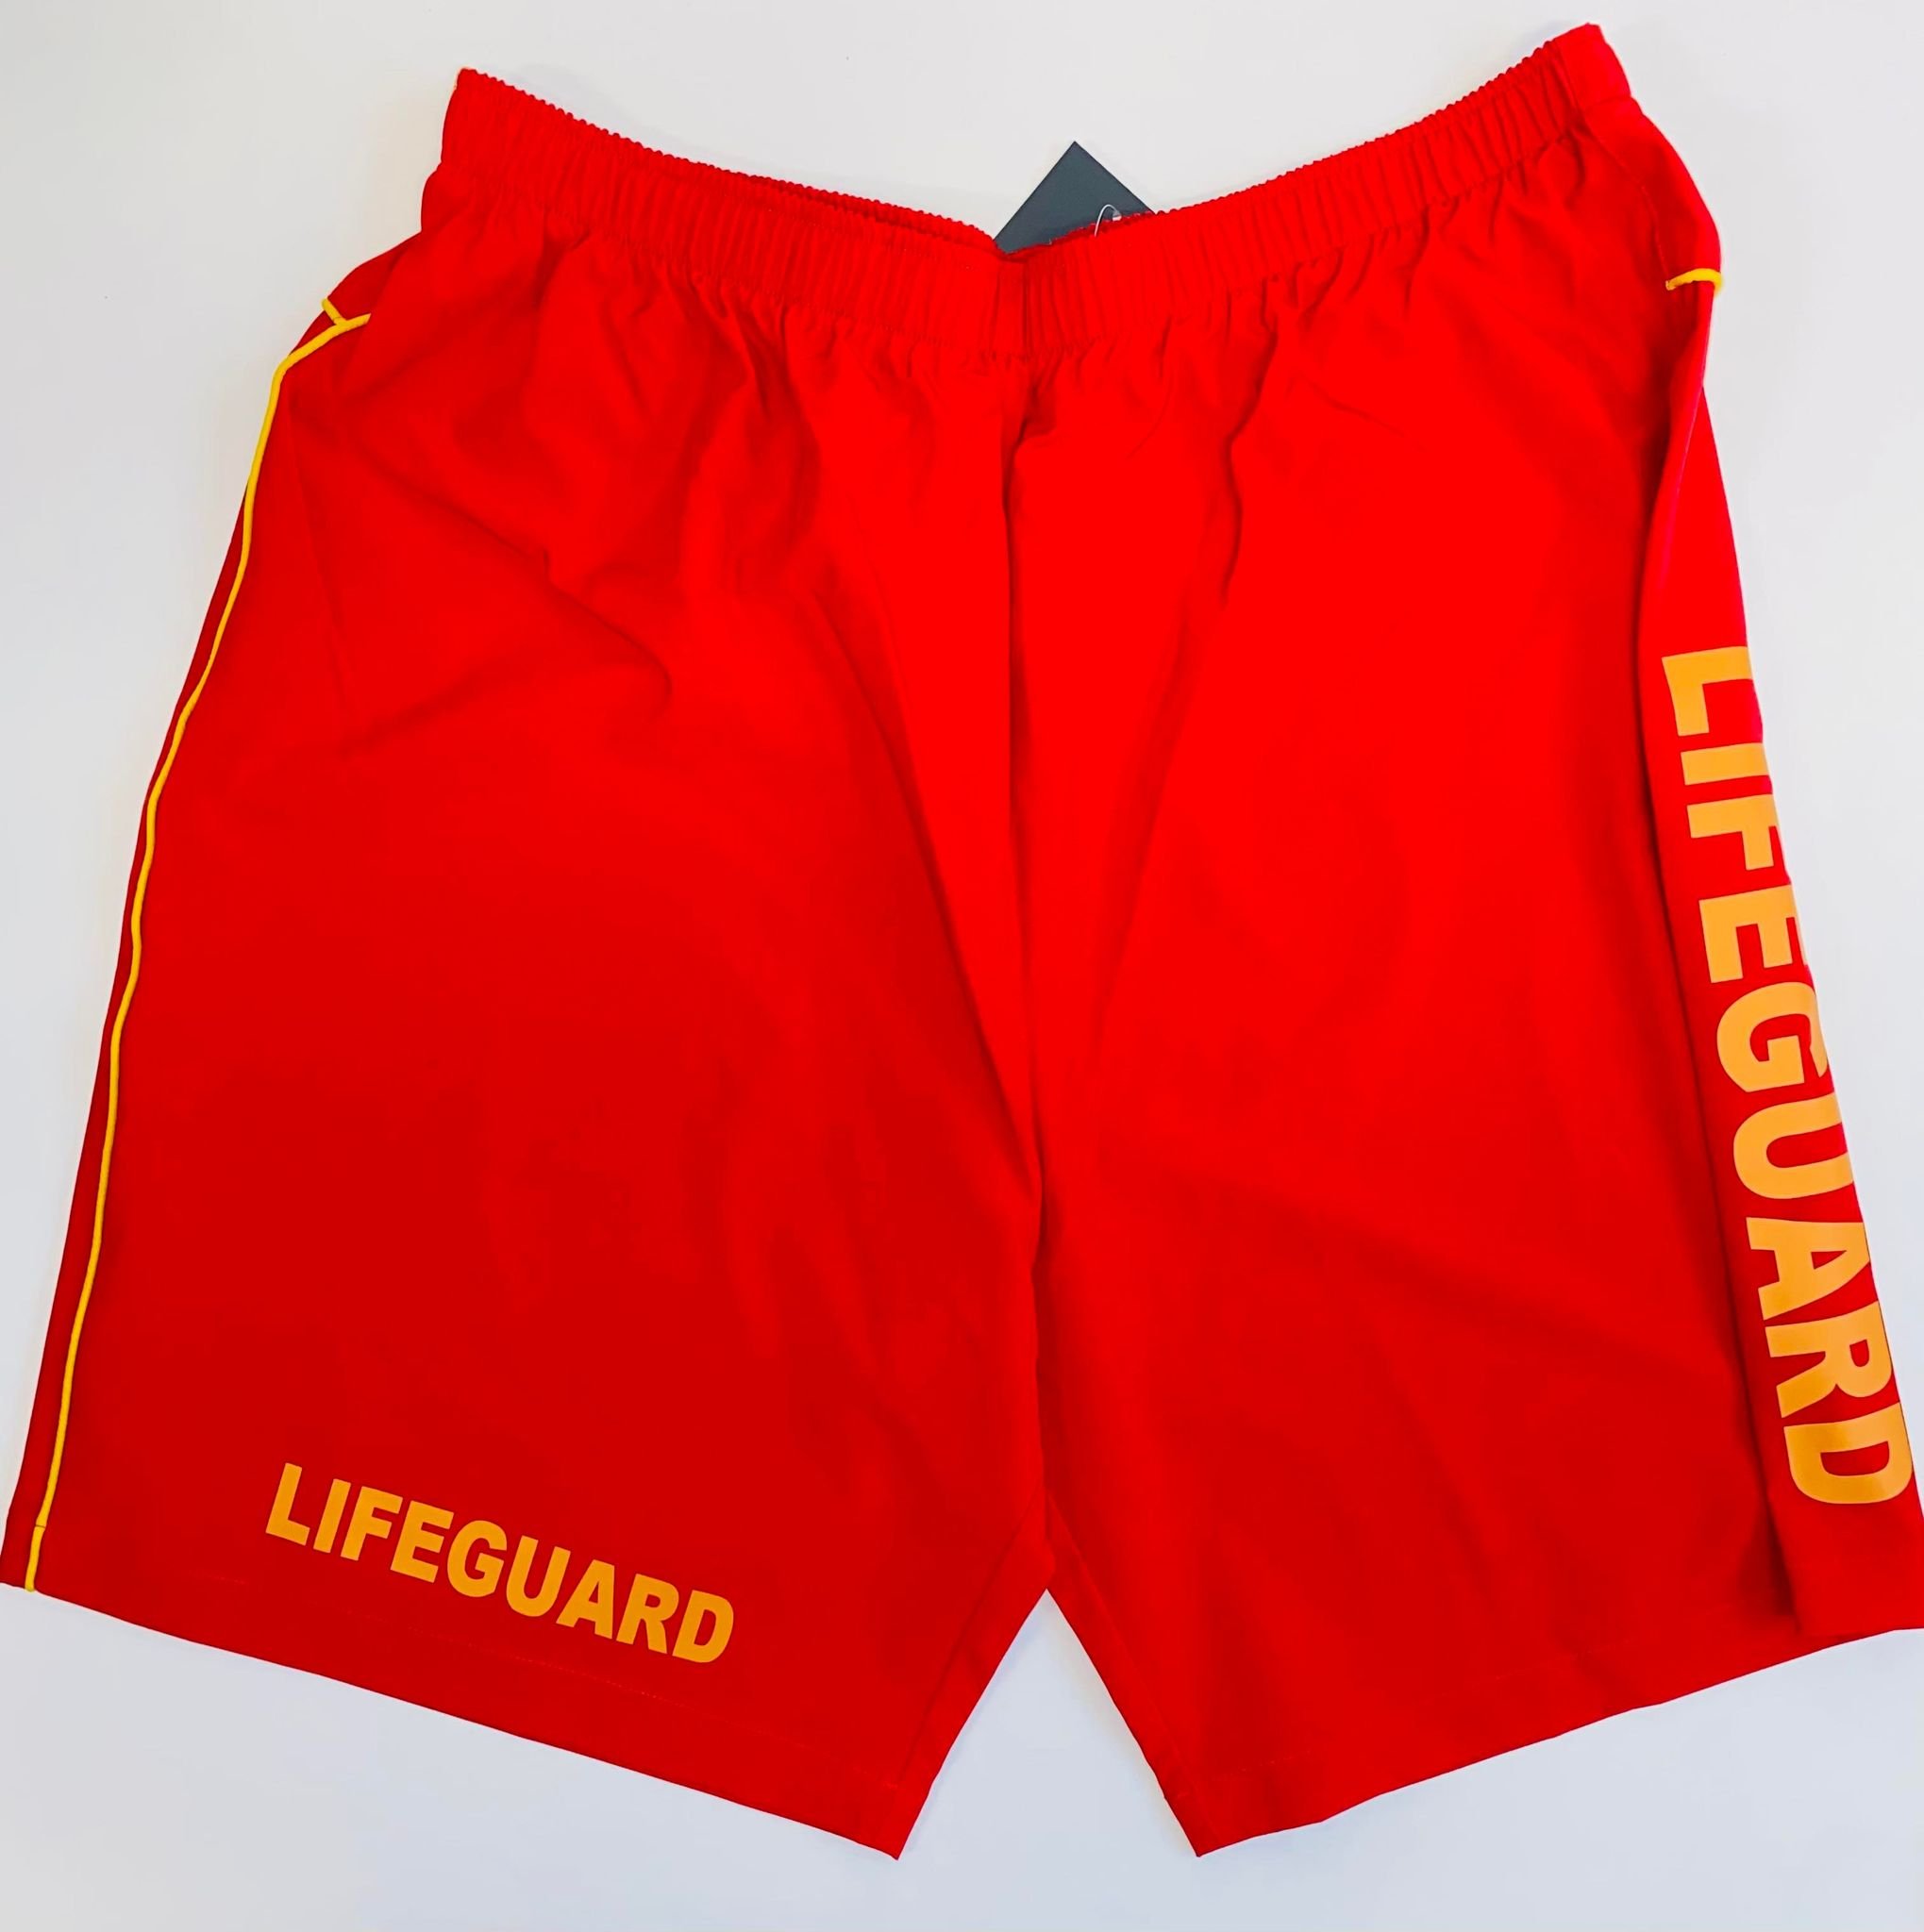 Lifeguard - Shorts - $25.00 